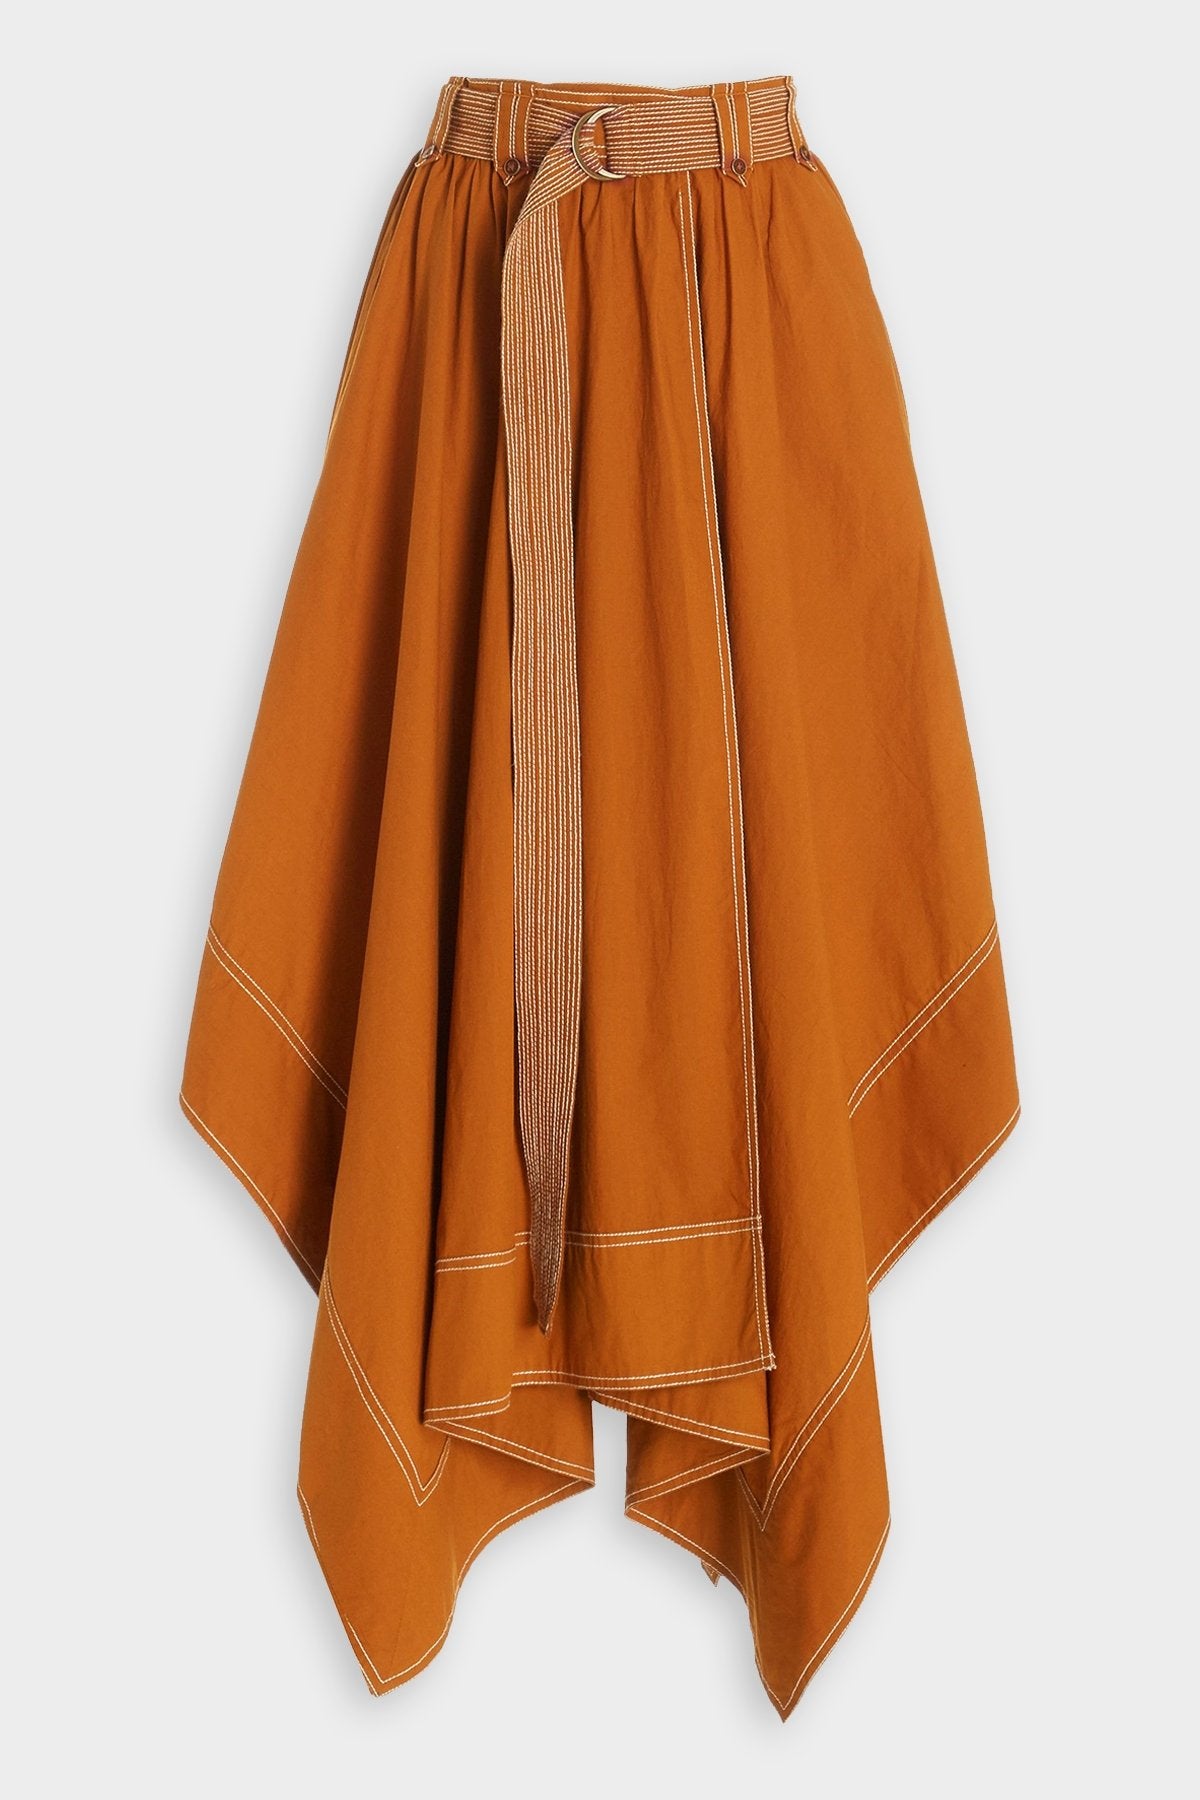 Brea Skirt in Sumac - shop-olivia.com